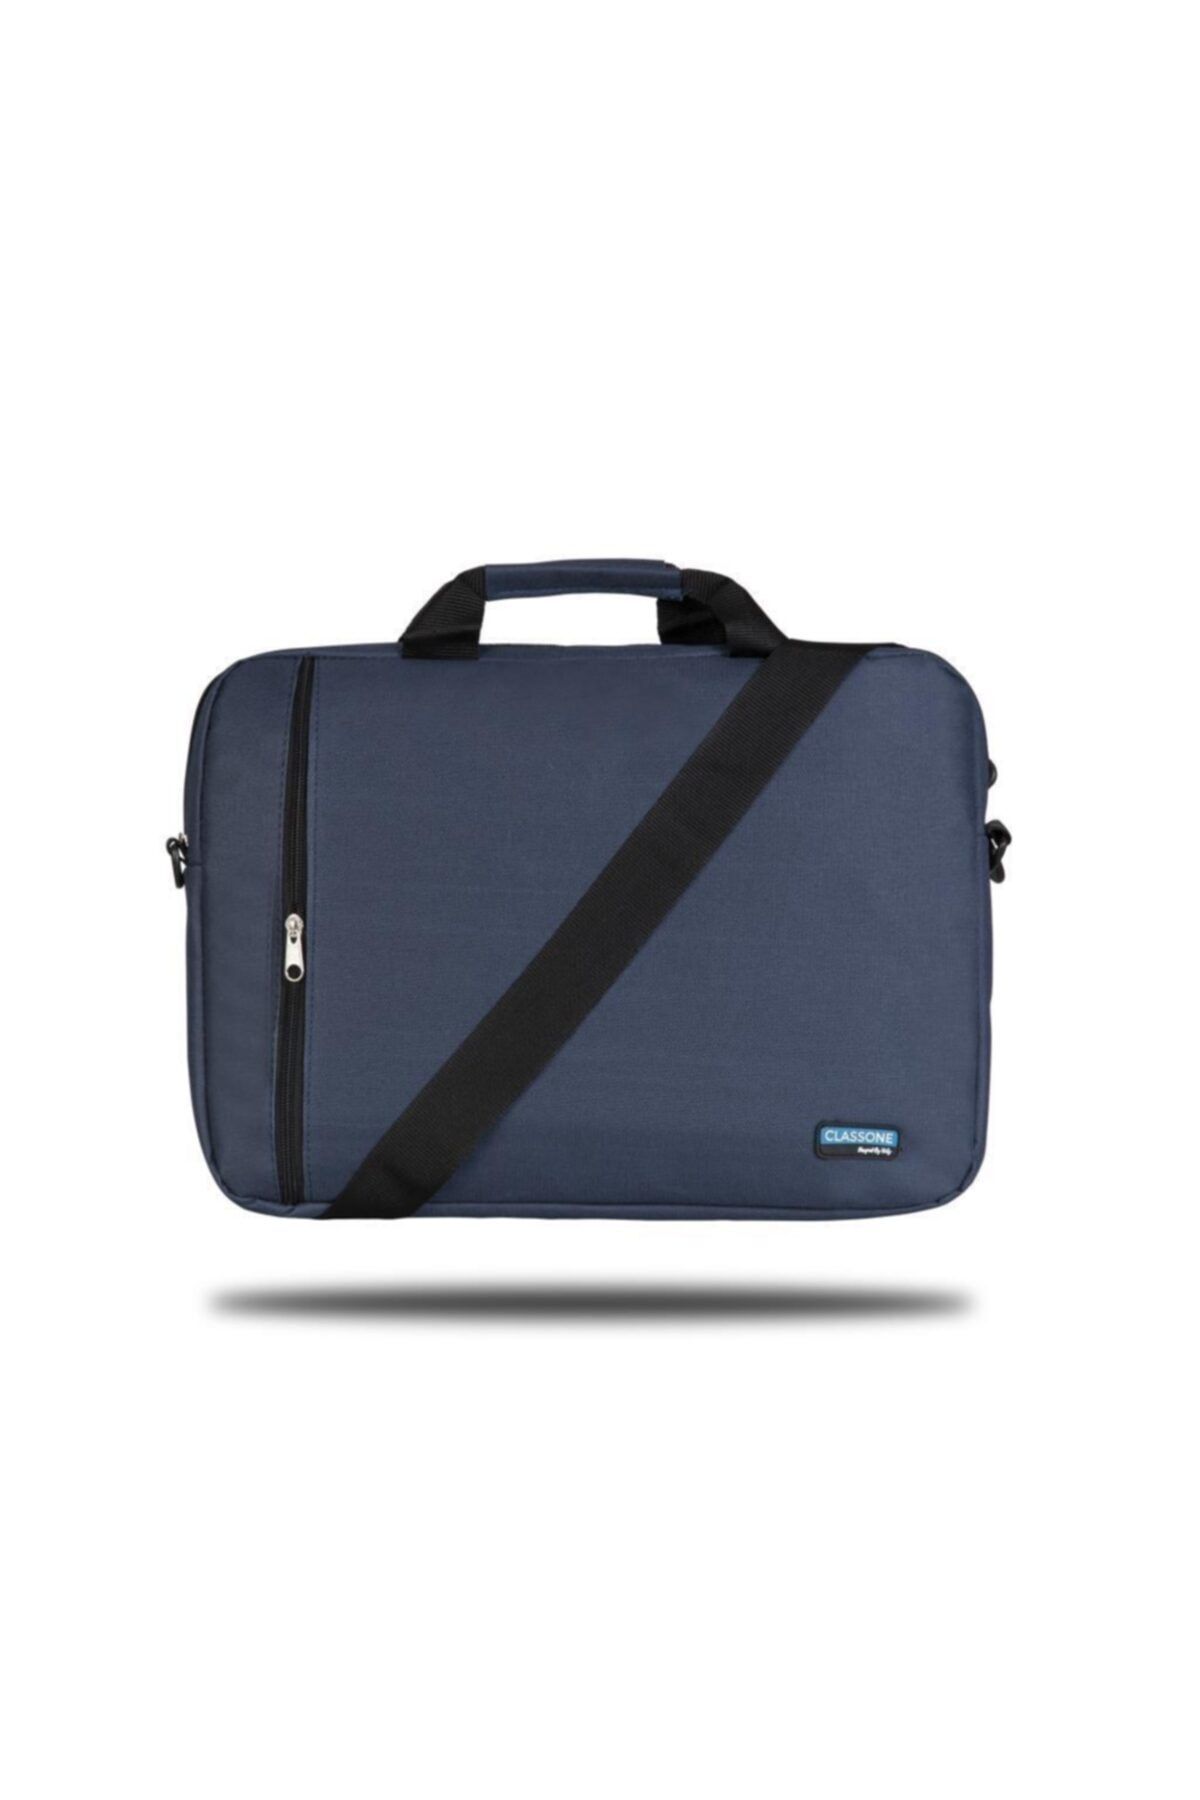 Classone Bnd2015.6 Inç Eko Serisi Laptop, Notebook El Çantası-lacivert